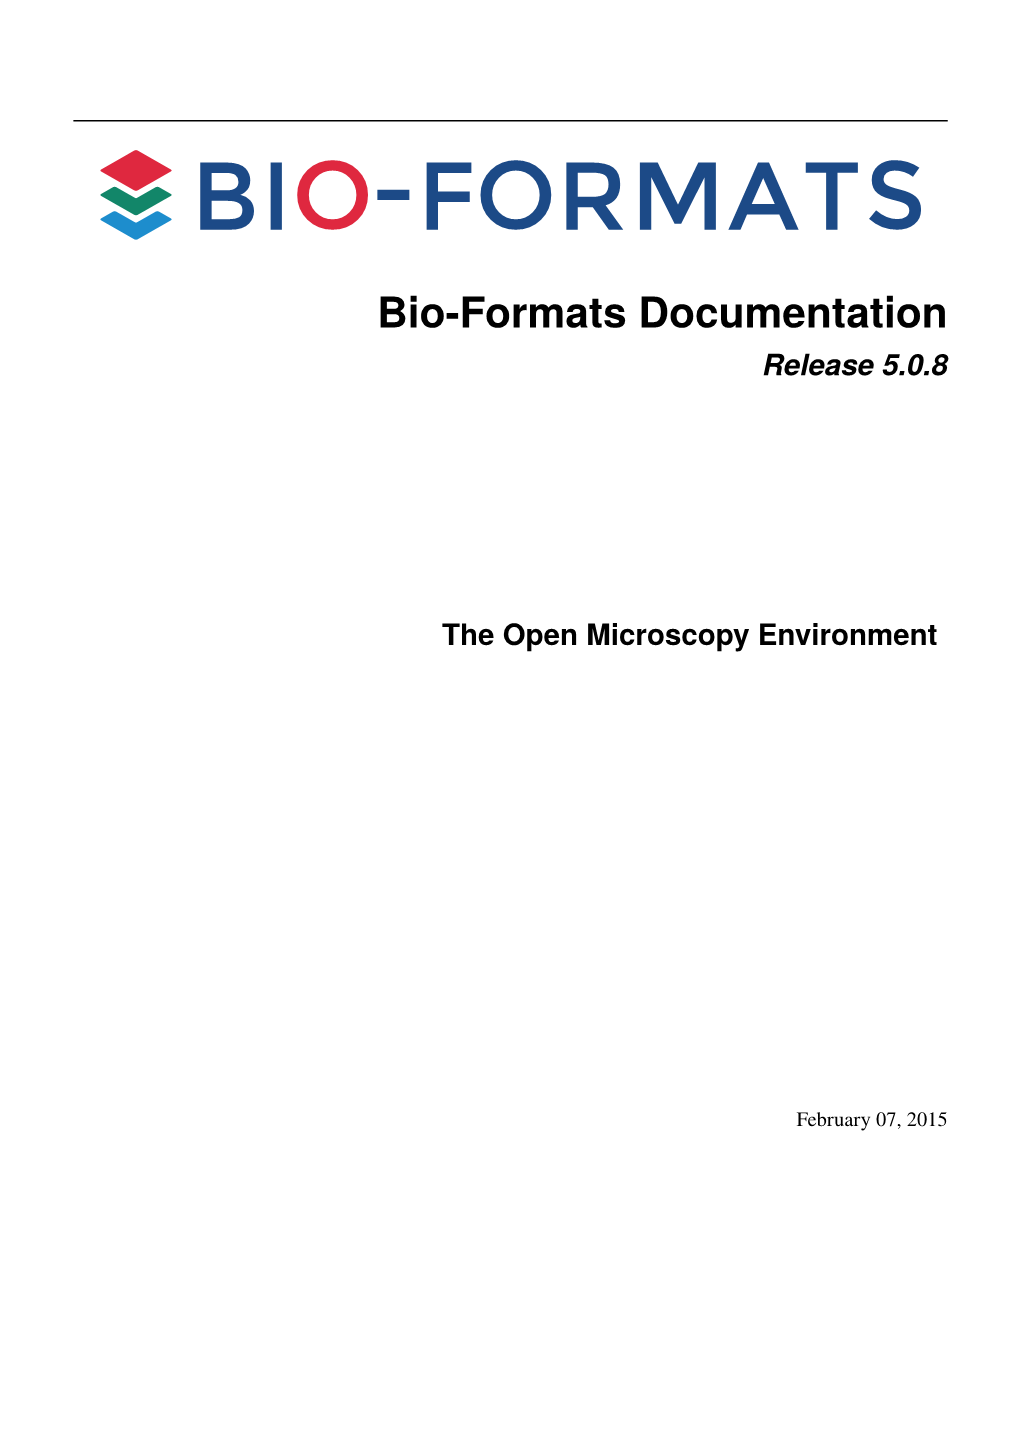 Bio-Formats Documentation Release 5.0.8